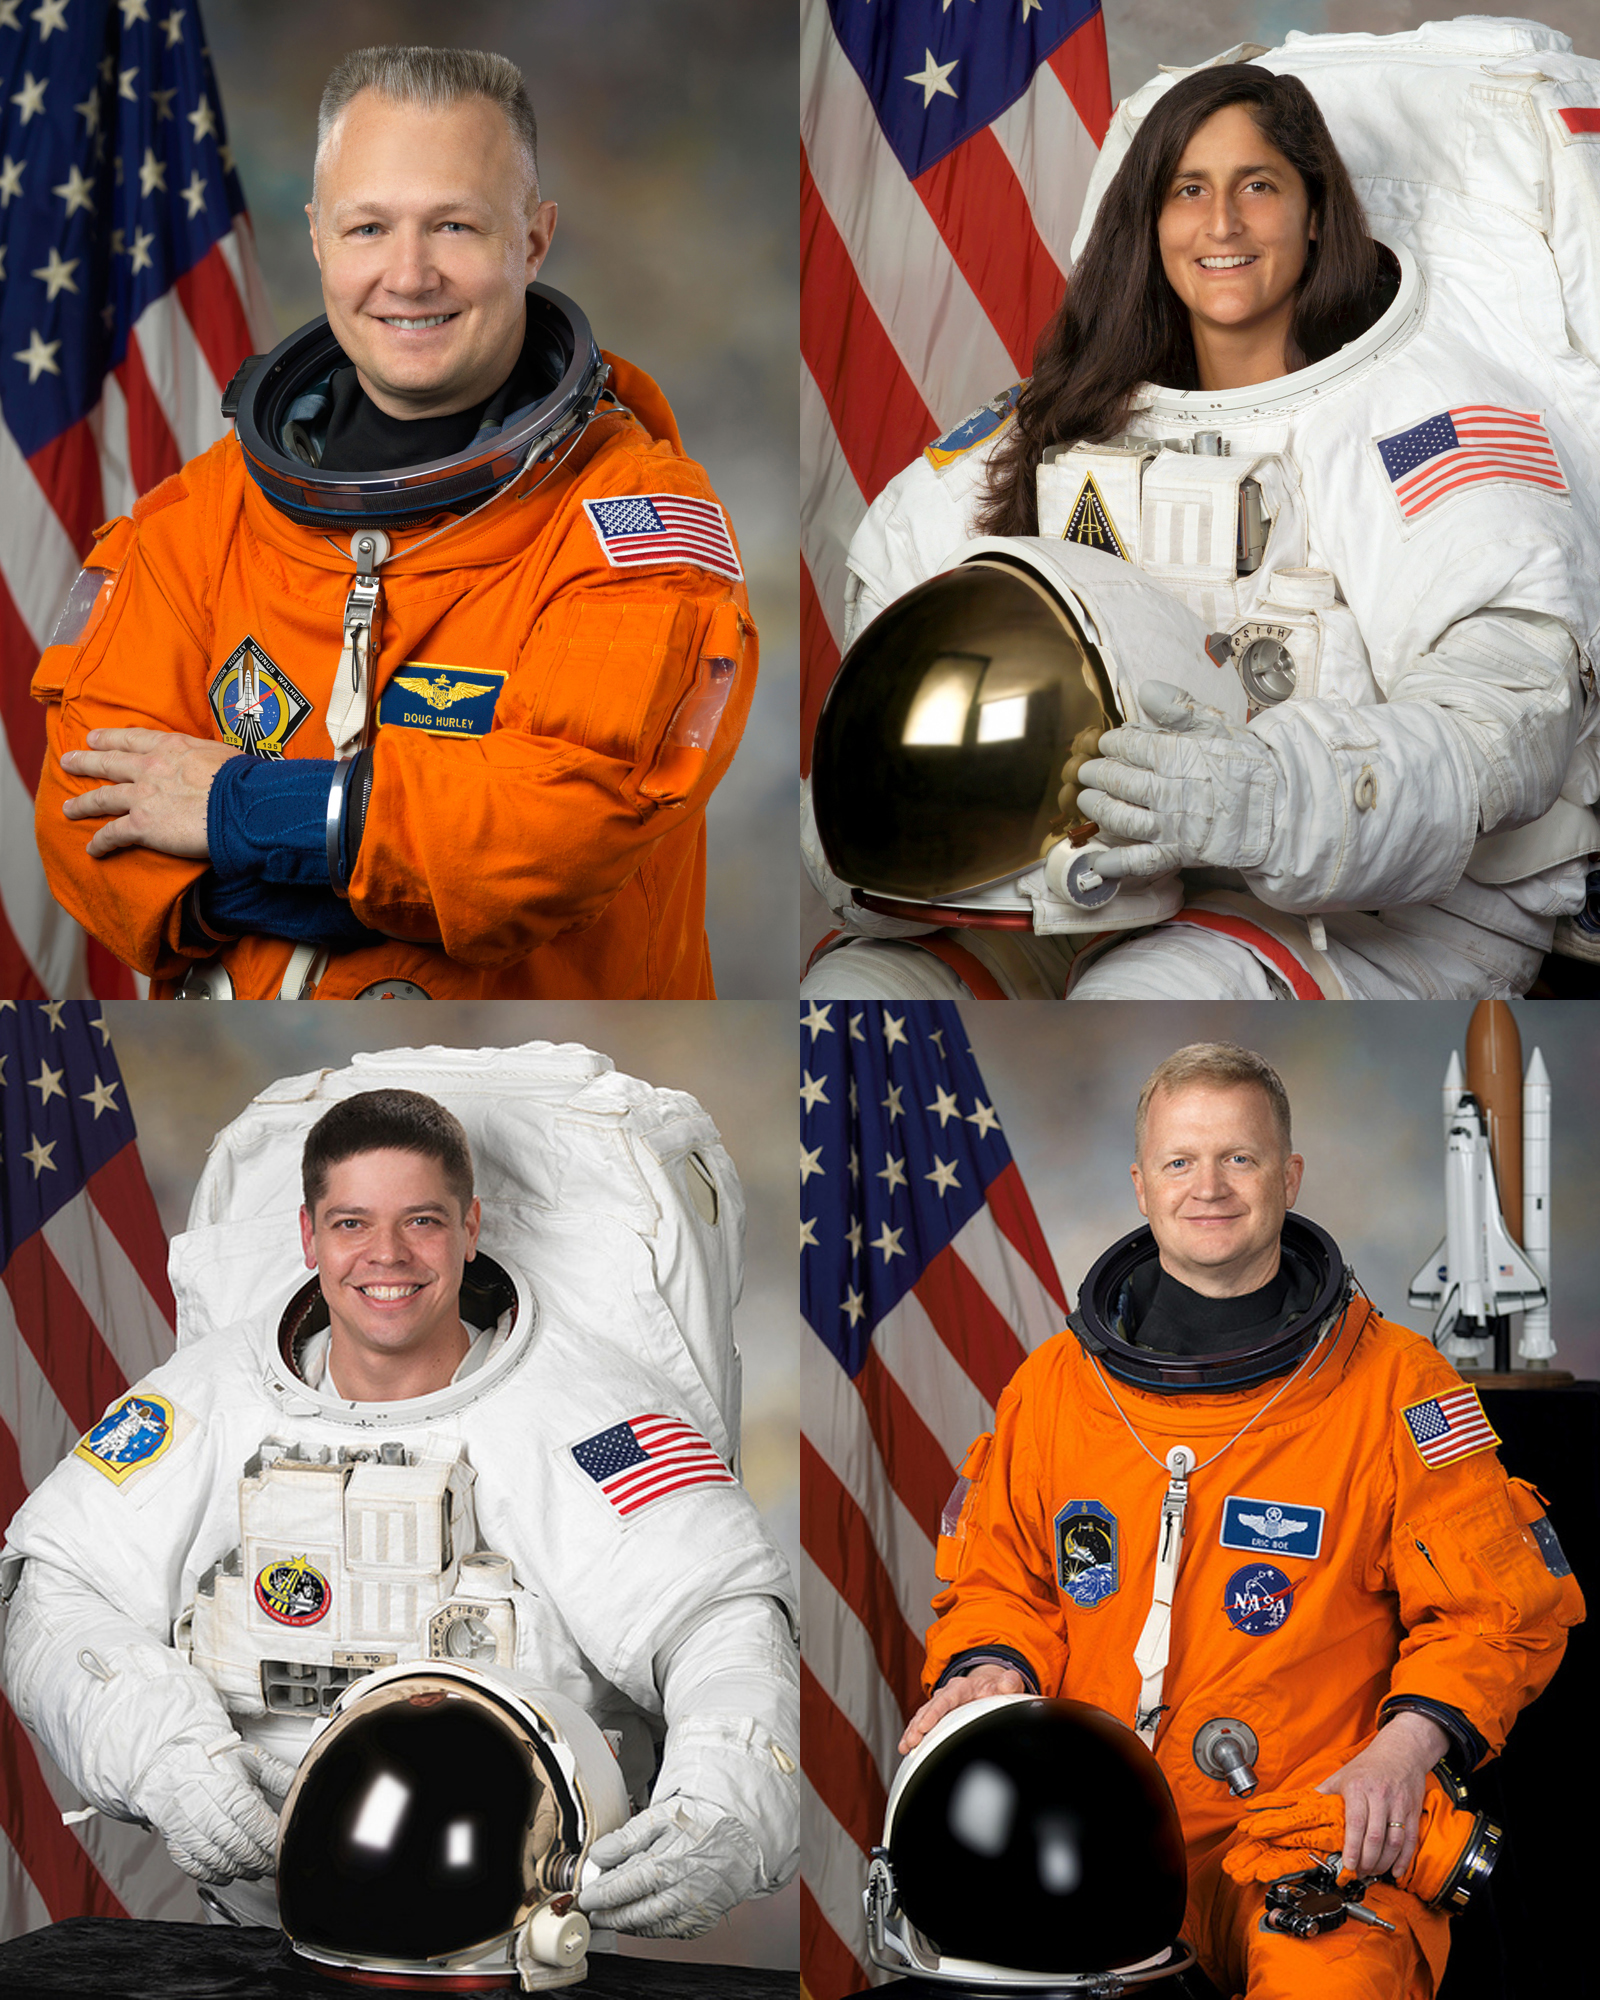 Clockwise from top left: Douglas G. Hurley, Sunita L. Williams, Eric A. Boe, and Robert L. Behnken. (NASA)